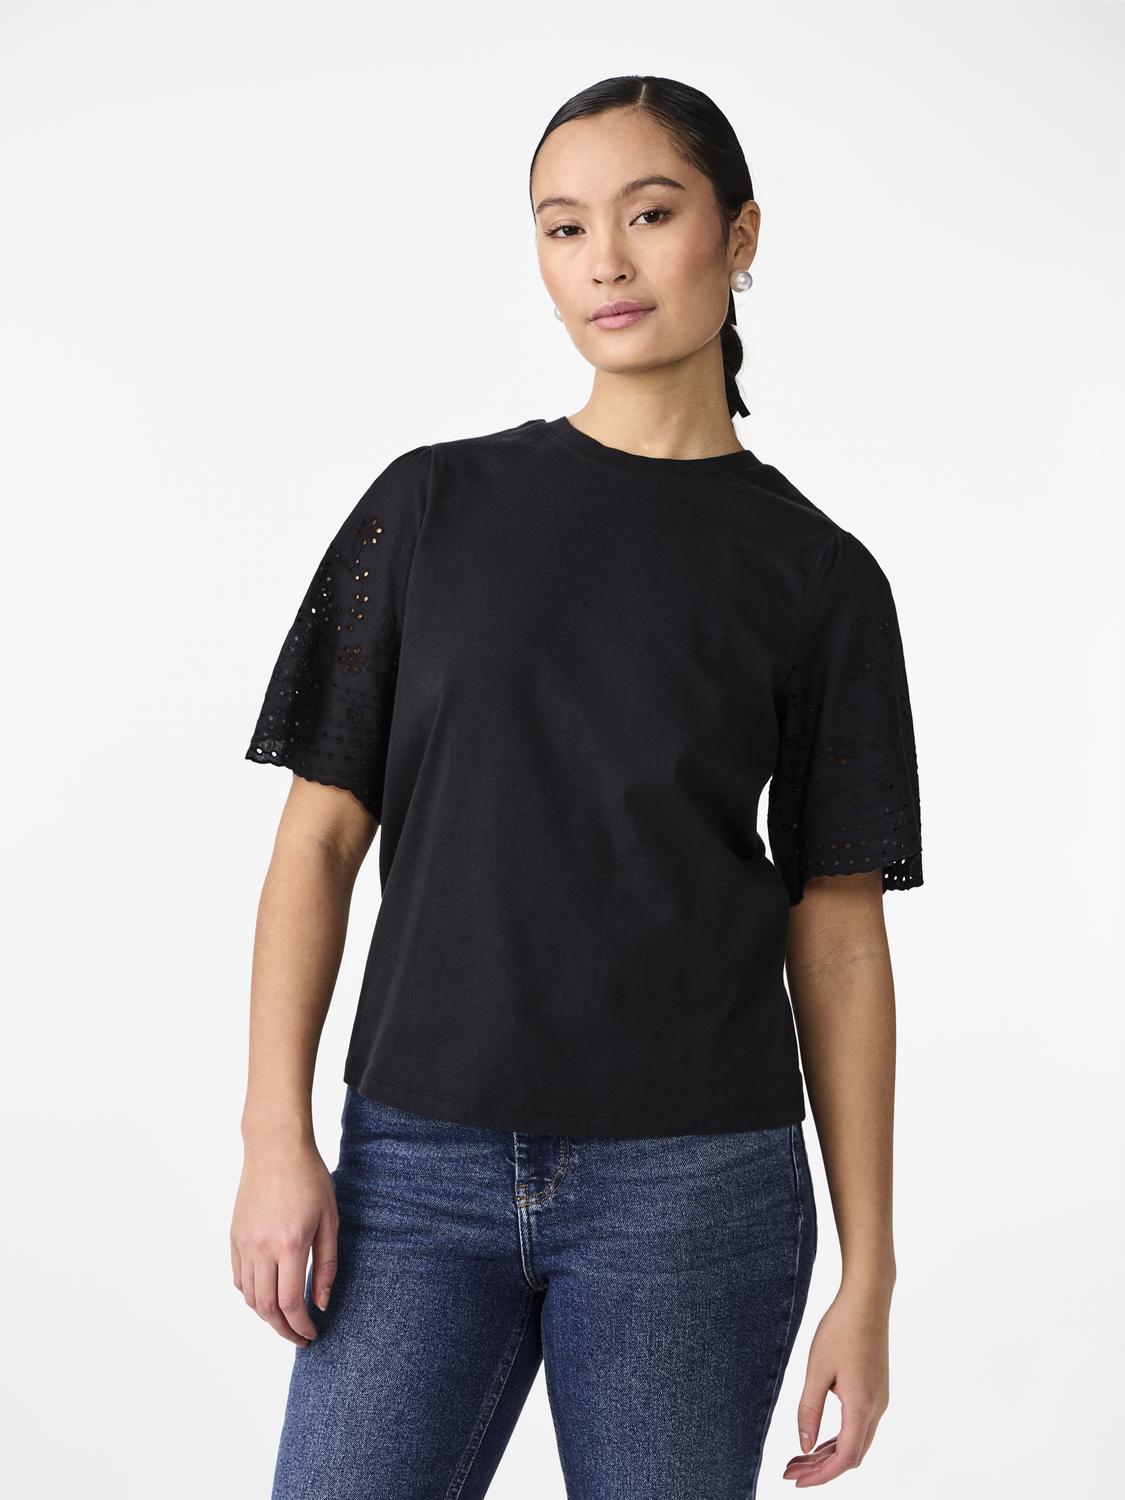 YASLEX T-Shirt - Black